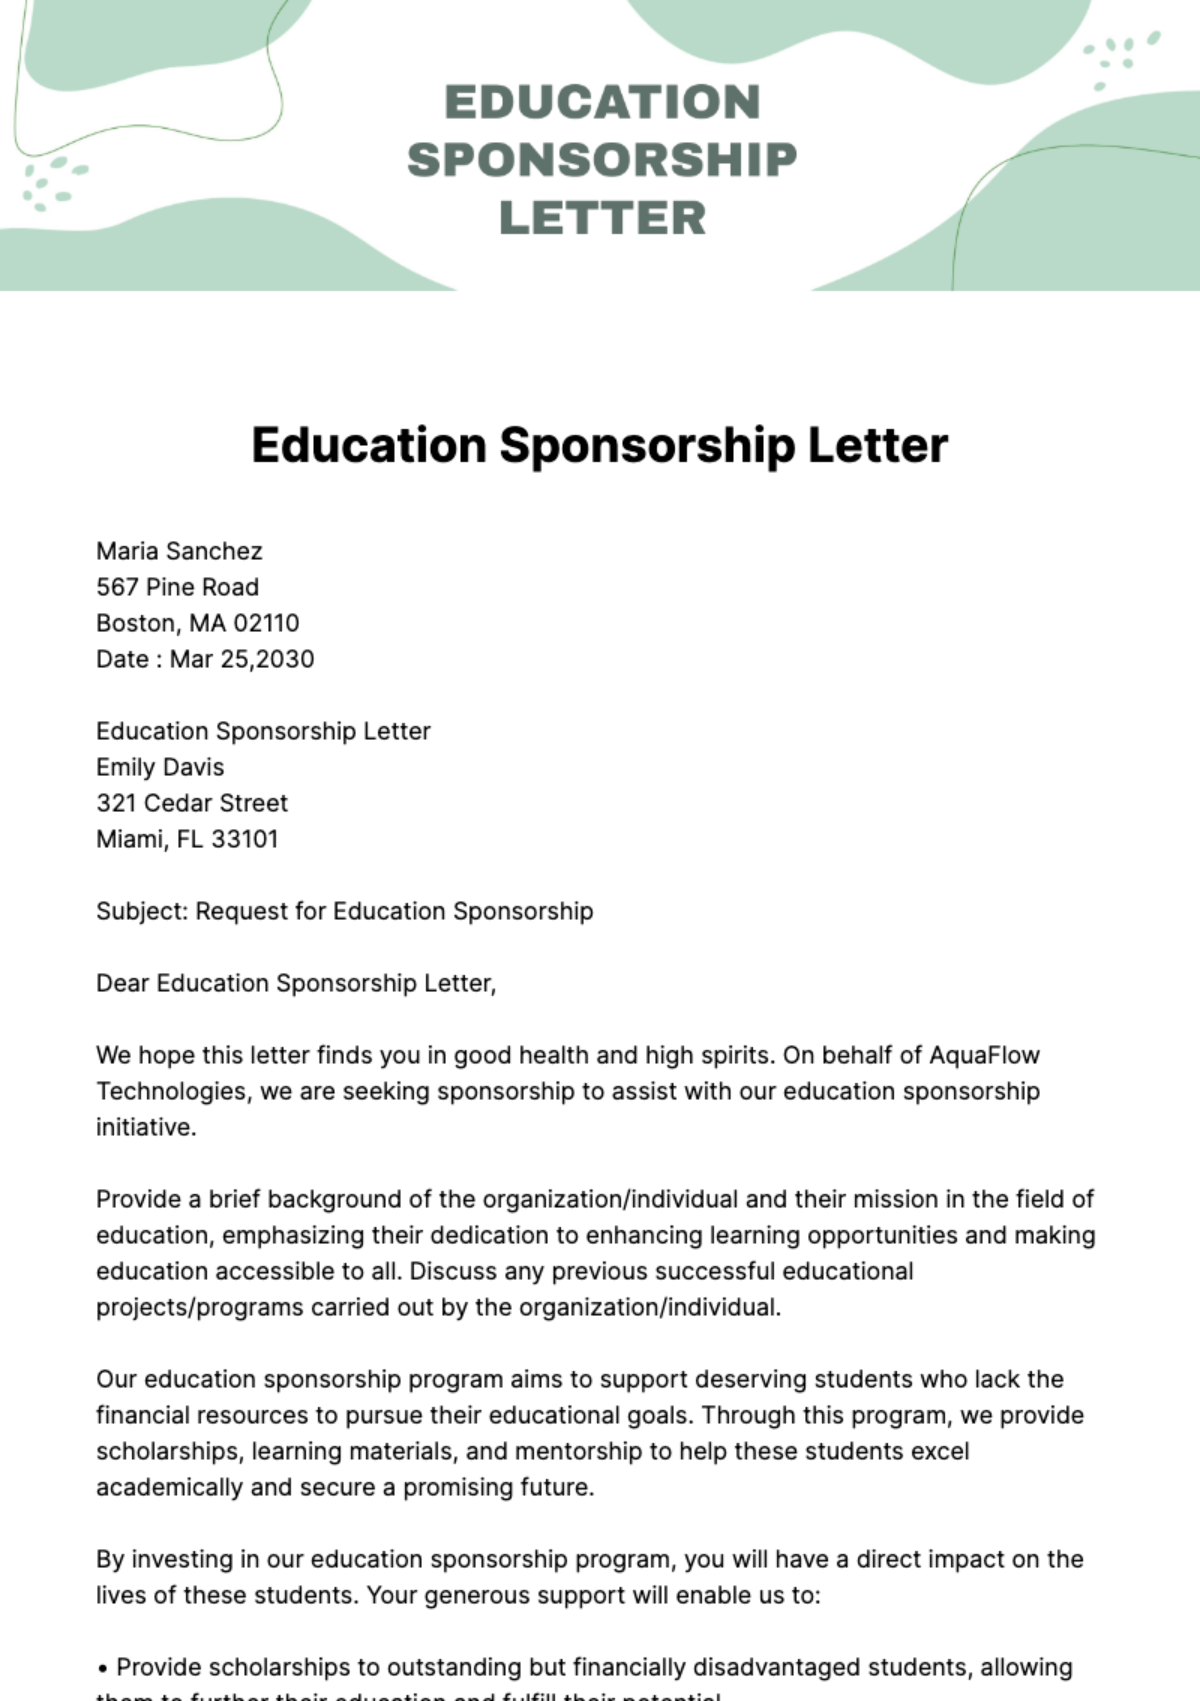 Free Education Sponsorship Letter Template